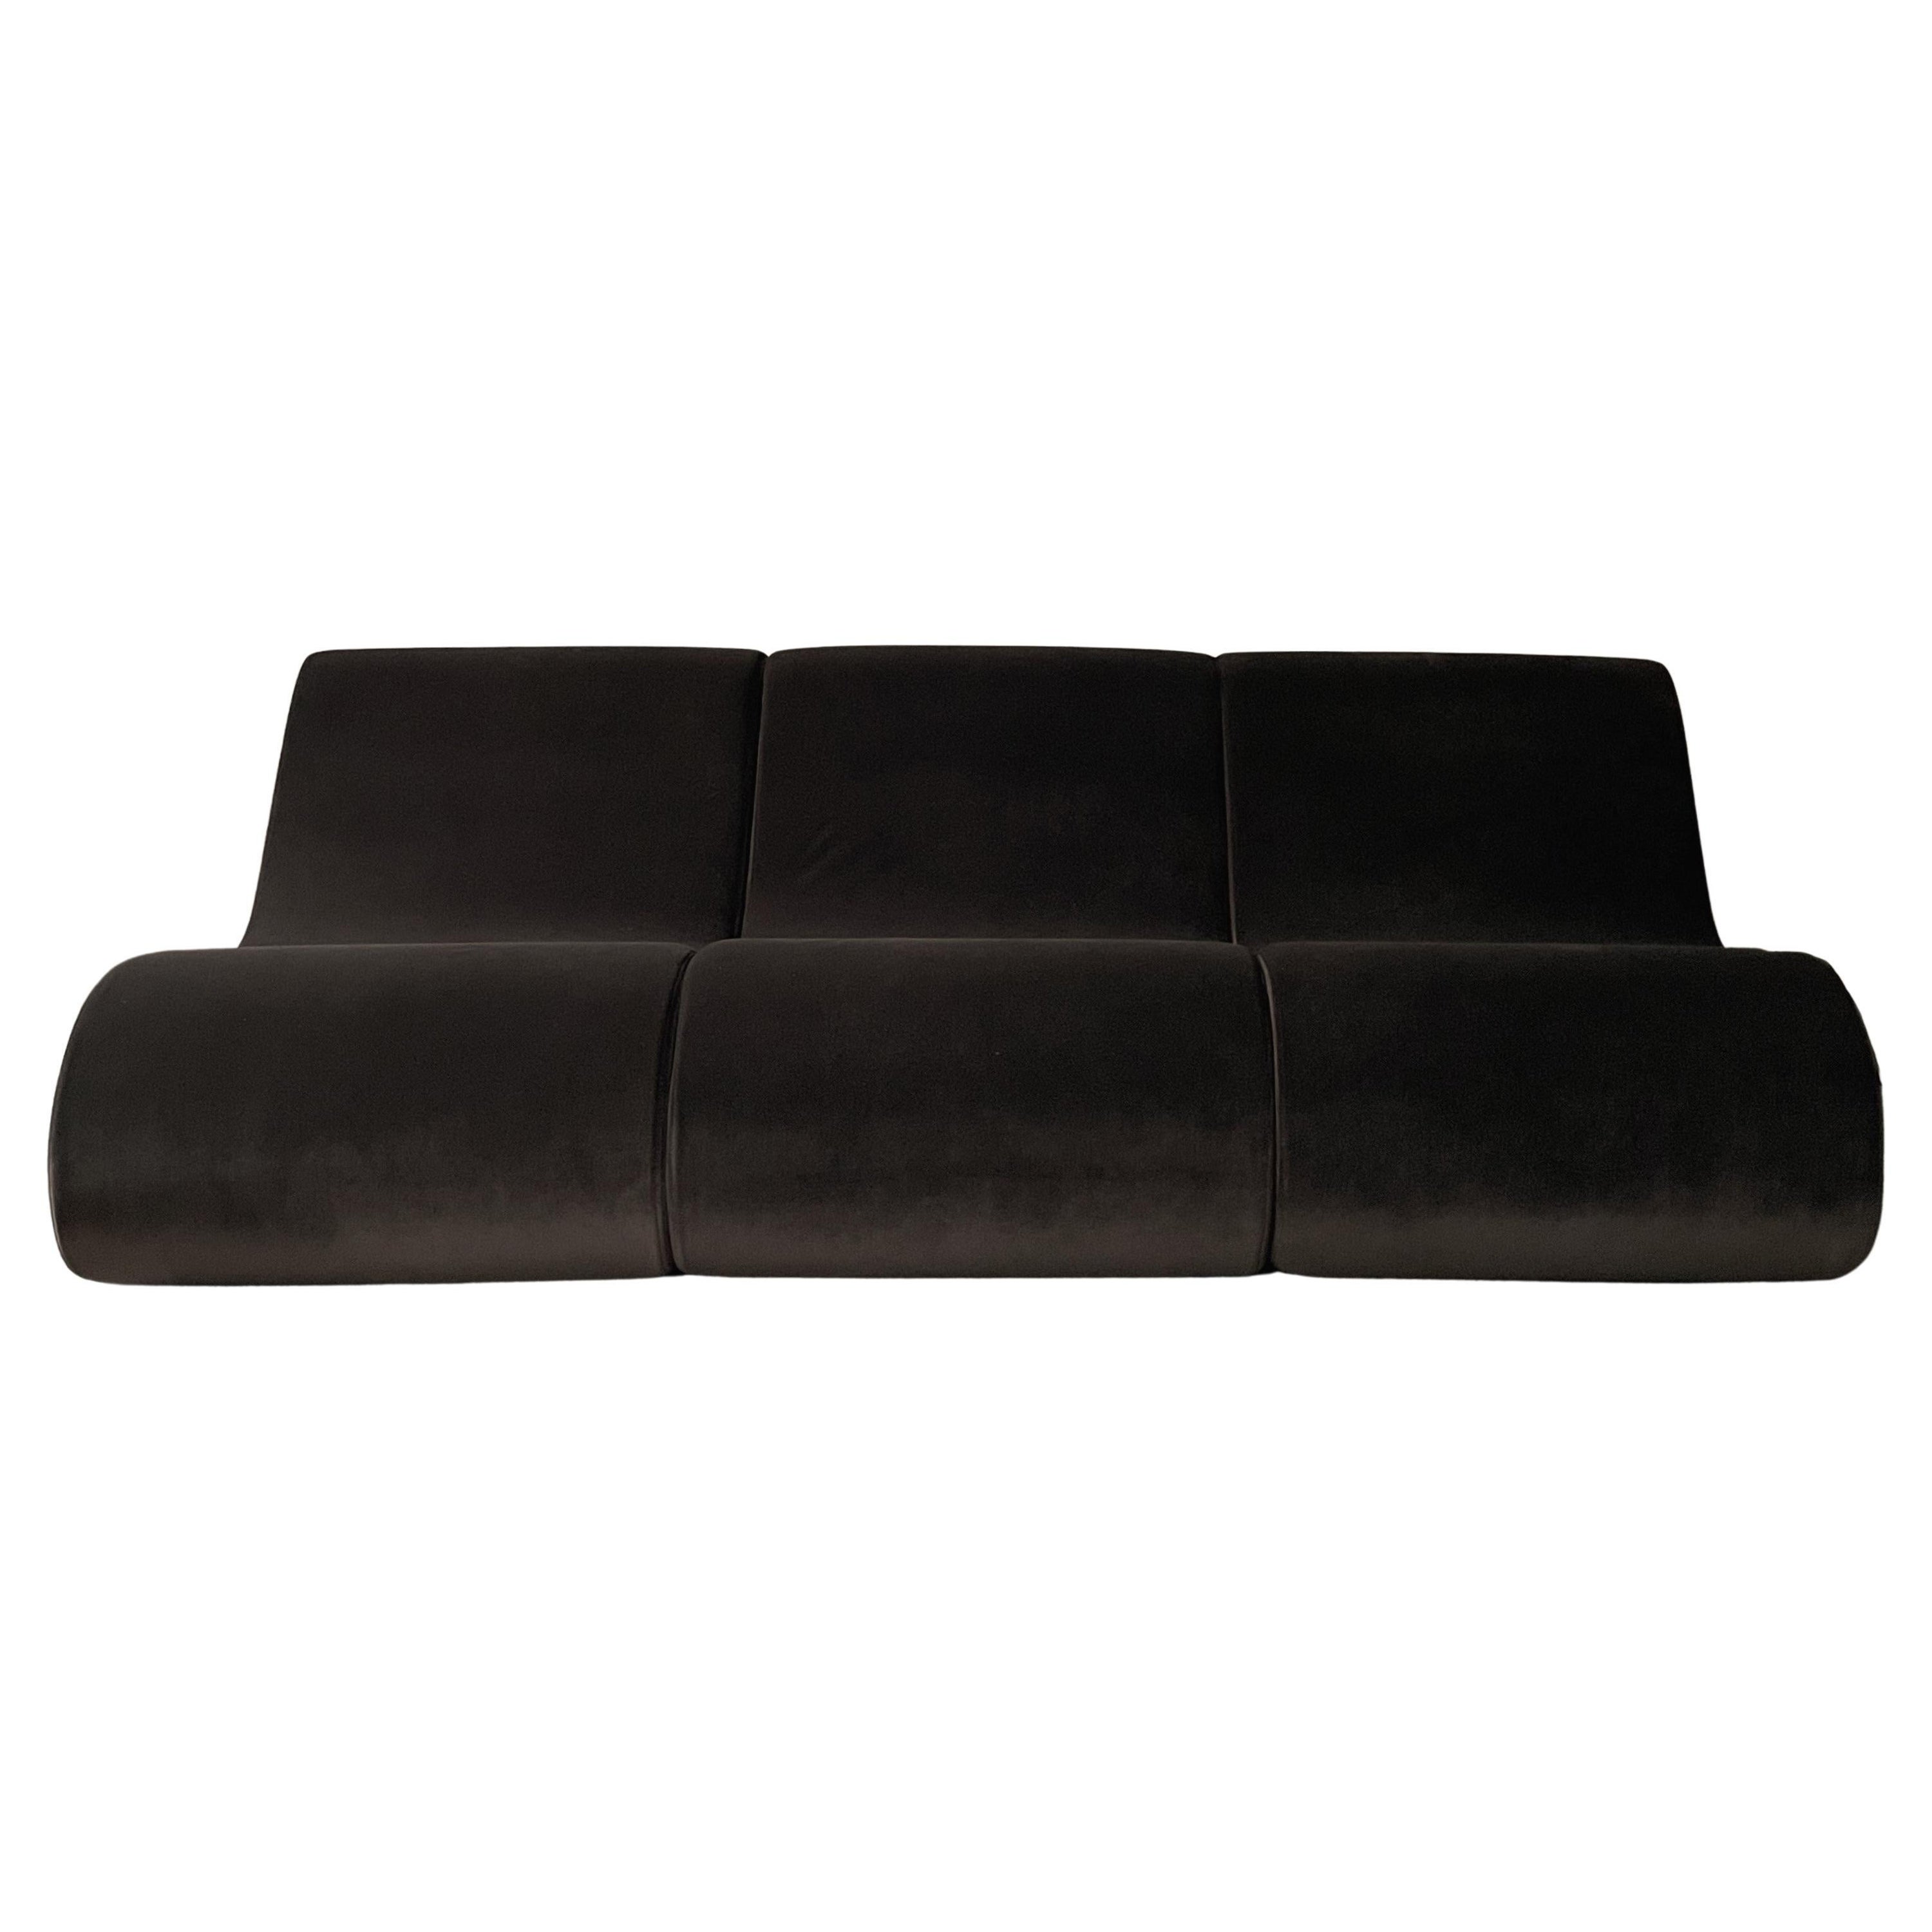 Modular Sofa by kars